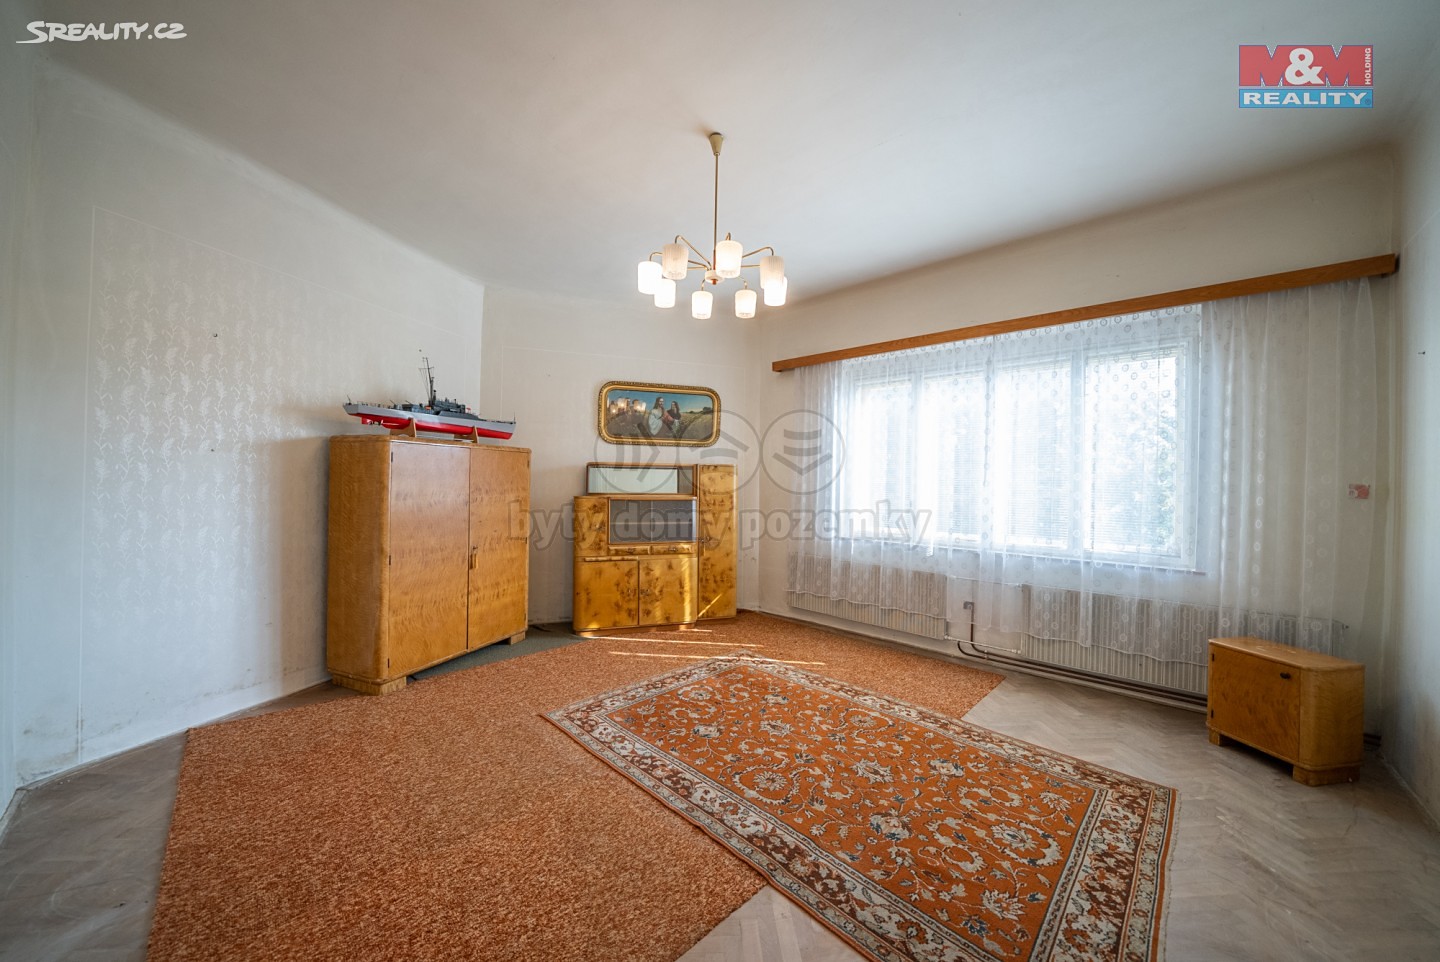 Prodej  rodinného domu 185 m², pozemek 982 m², Vyškov - Nosálovice, okres Vyškov